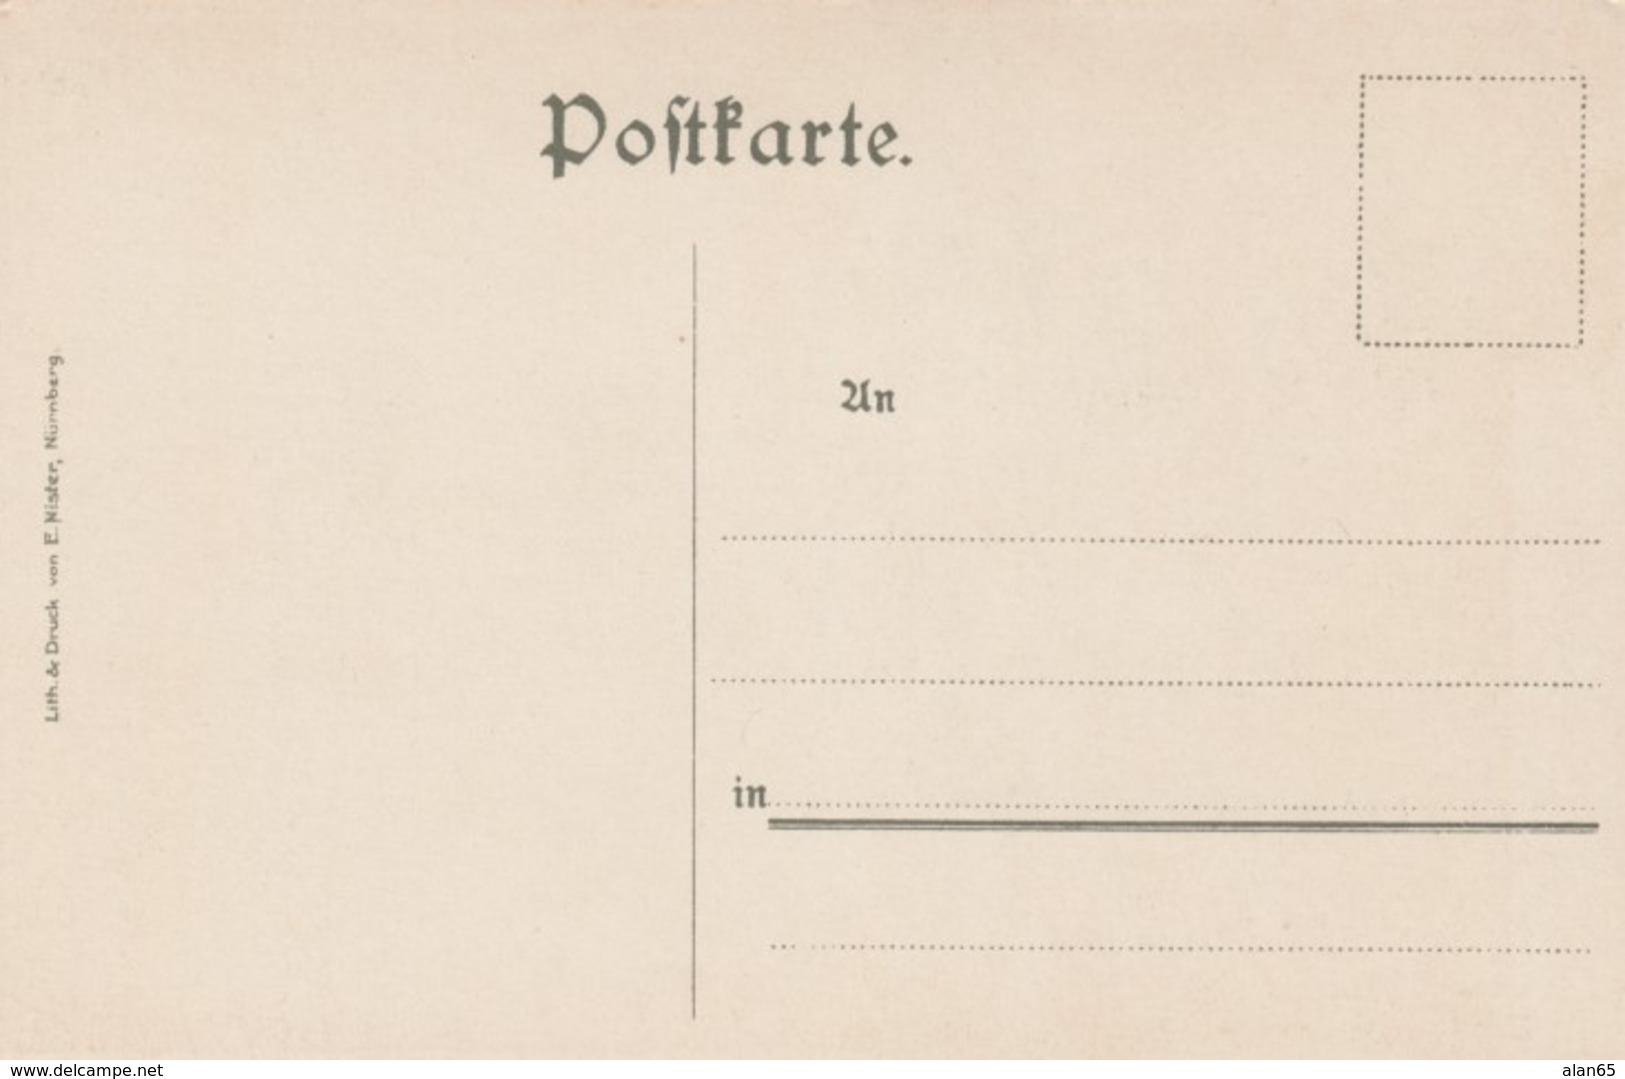 Lot Of 8 Postcards, German Medieval Public Punishments 'Ad J' Artist Images, Cards Dice Demon Etc. - Customs